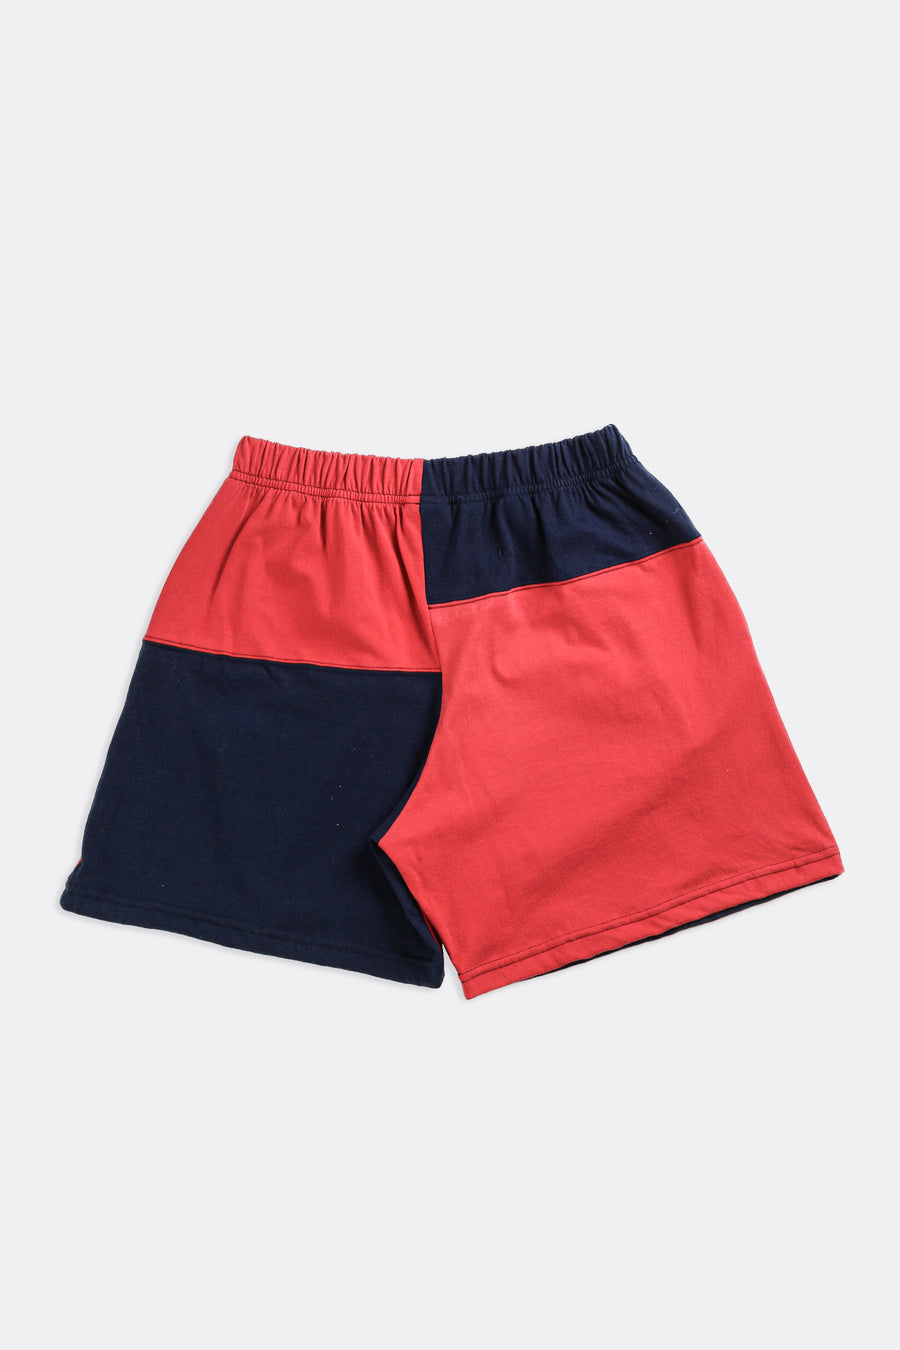 Unisex Rework Patchwork Tee Shorts - Women's S, Men's XS